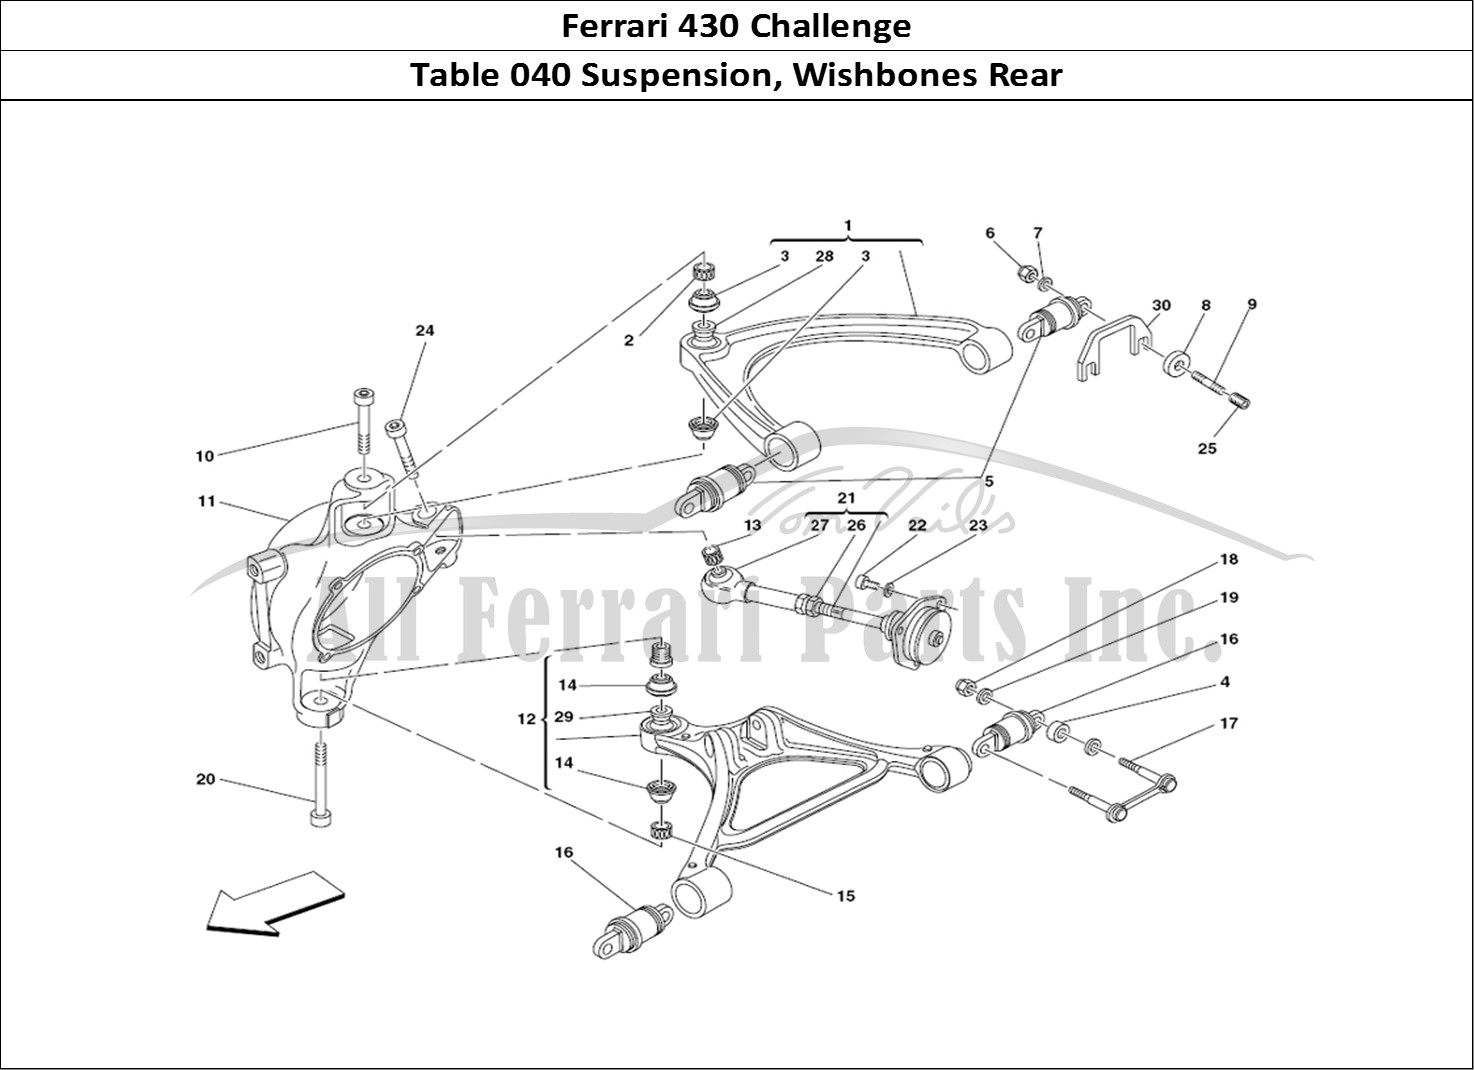 Ferrari Parts Ferrari 430 Challenge (2006) Page 040 Rear Suspension - Wishbon